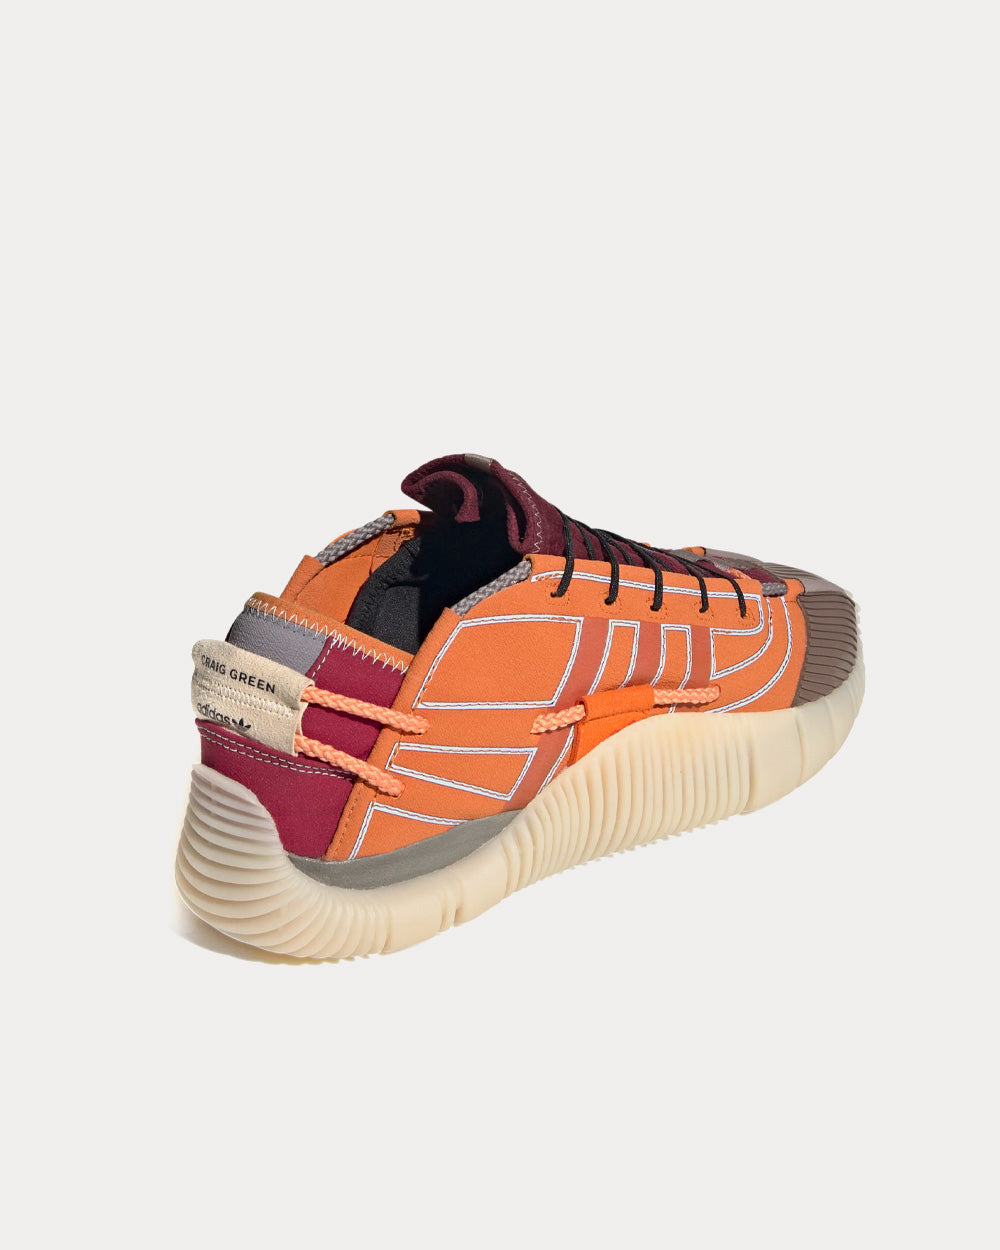 Adidas x Craig Green - Scuba Phormar Tactile Orange Low Top Sneakers